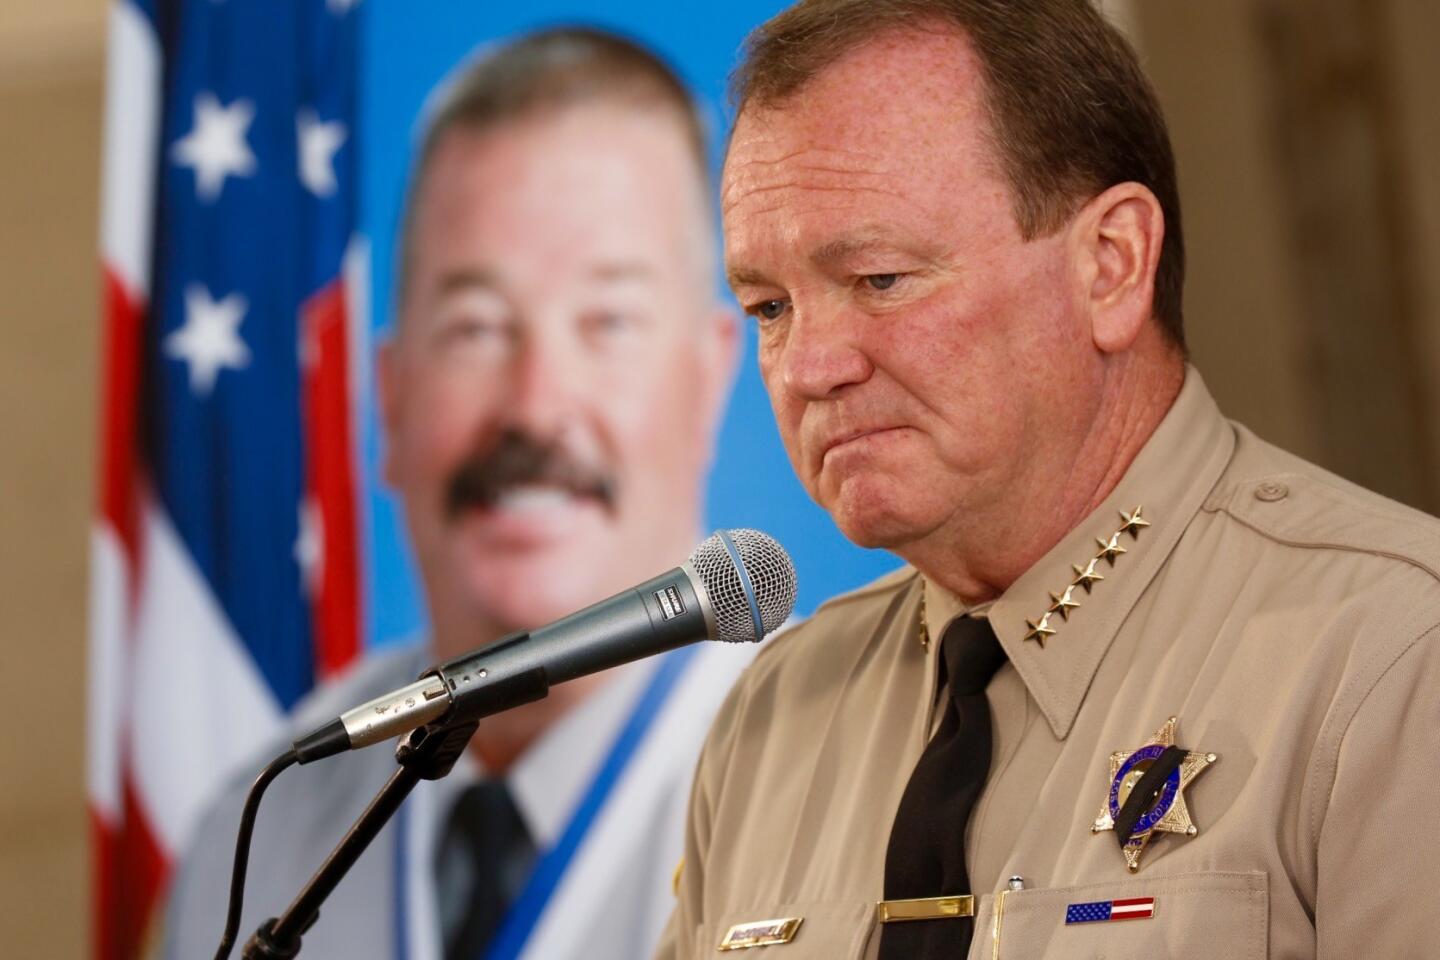 Memorial for L.A. County sheriff’s Sgt. Steve Owen